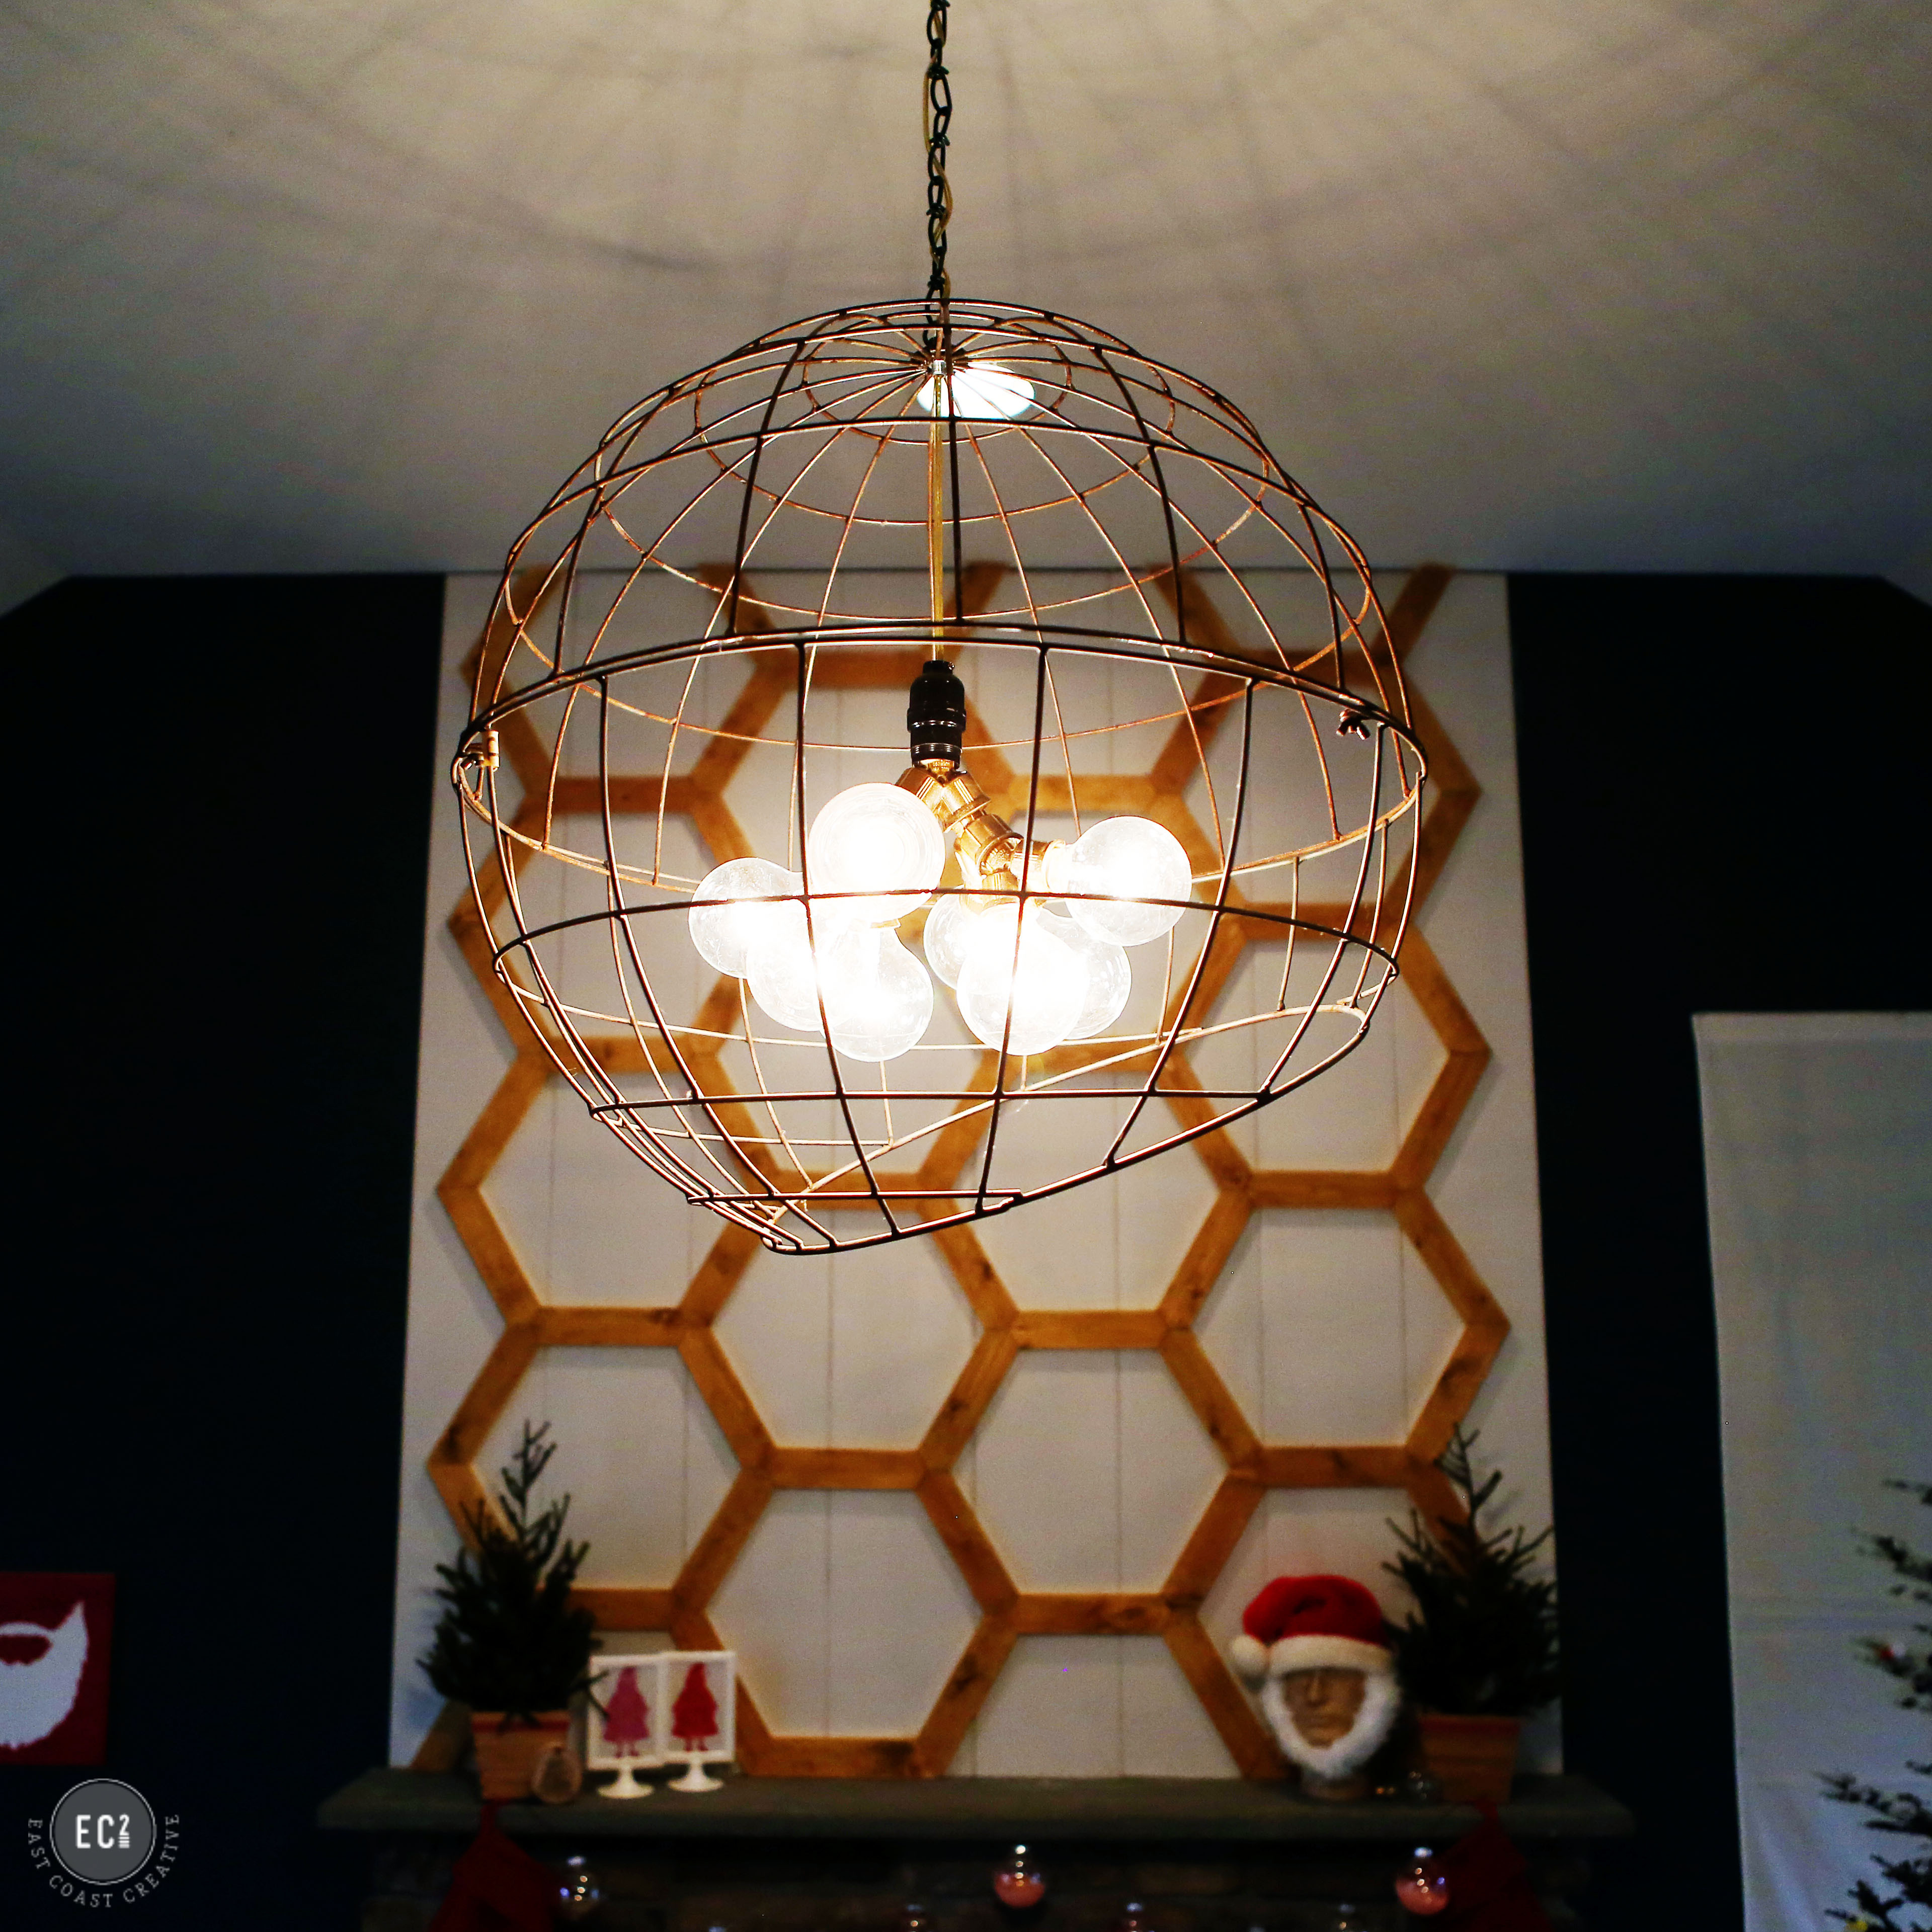 Best ideas about DIY Hanging Light Fixture
. Save or Pin DIY Modern Pendant Light East Coast Creative Blog Now.